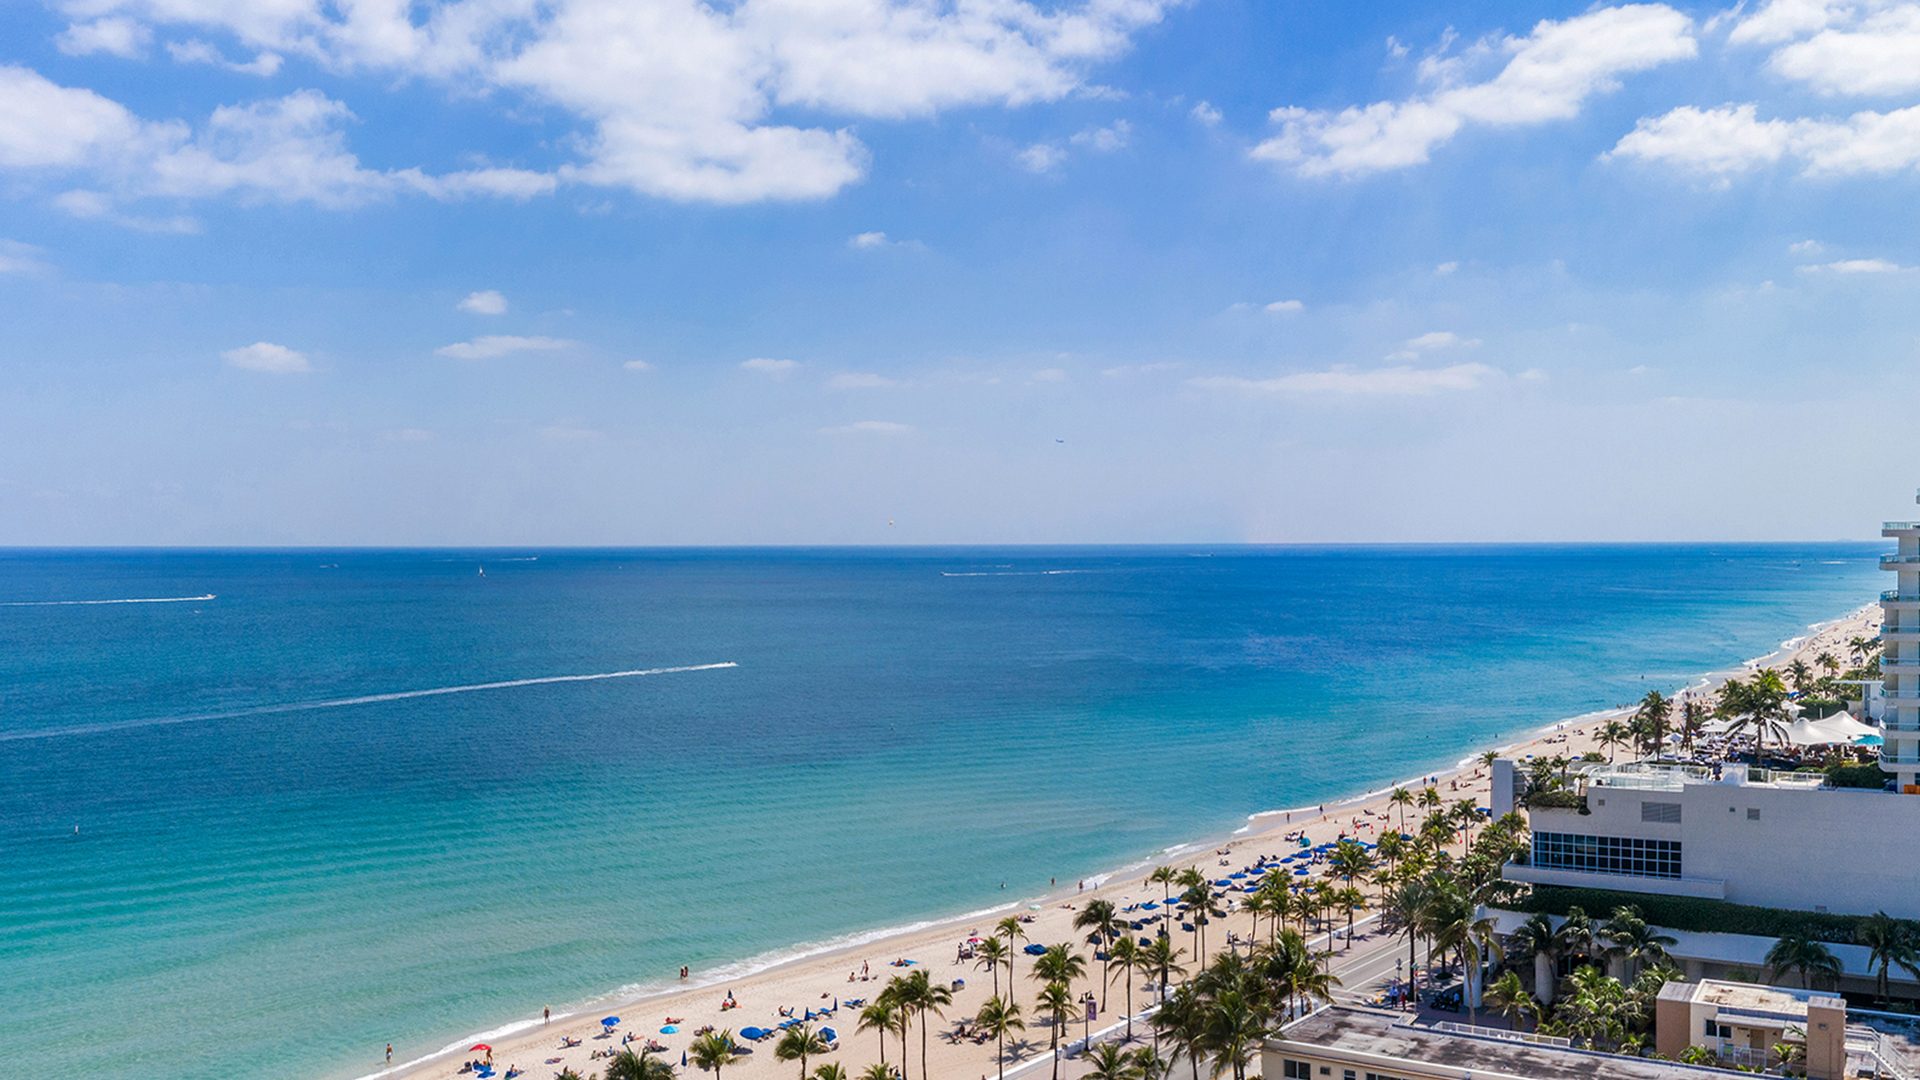 Selene Fort Lauderdale Beach, Luxury Oceanfrontt Condos in Fort Lauderdale